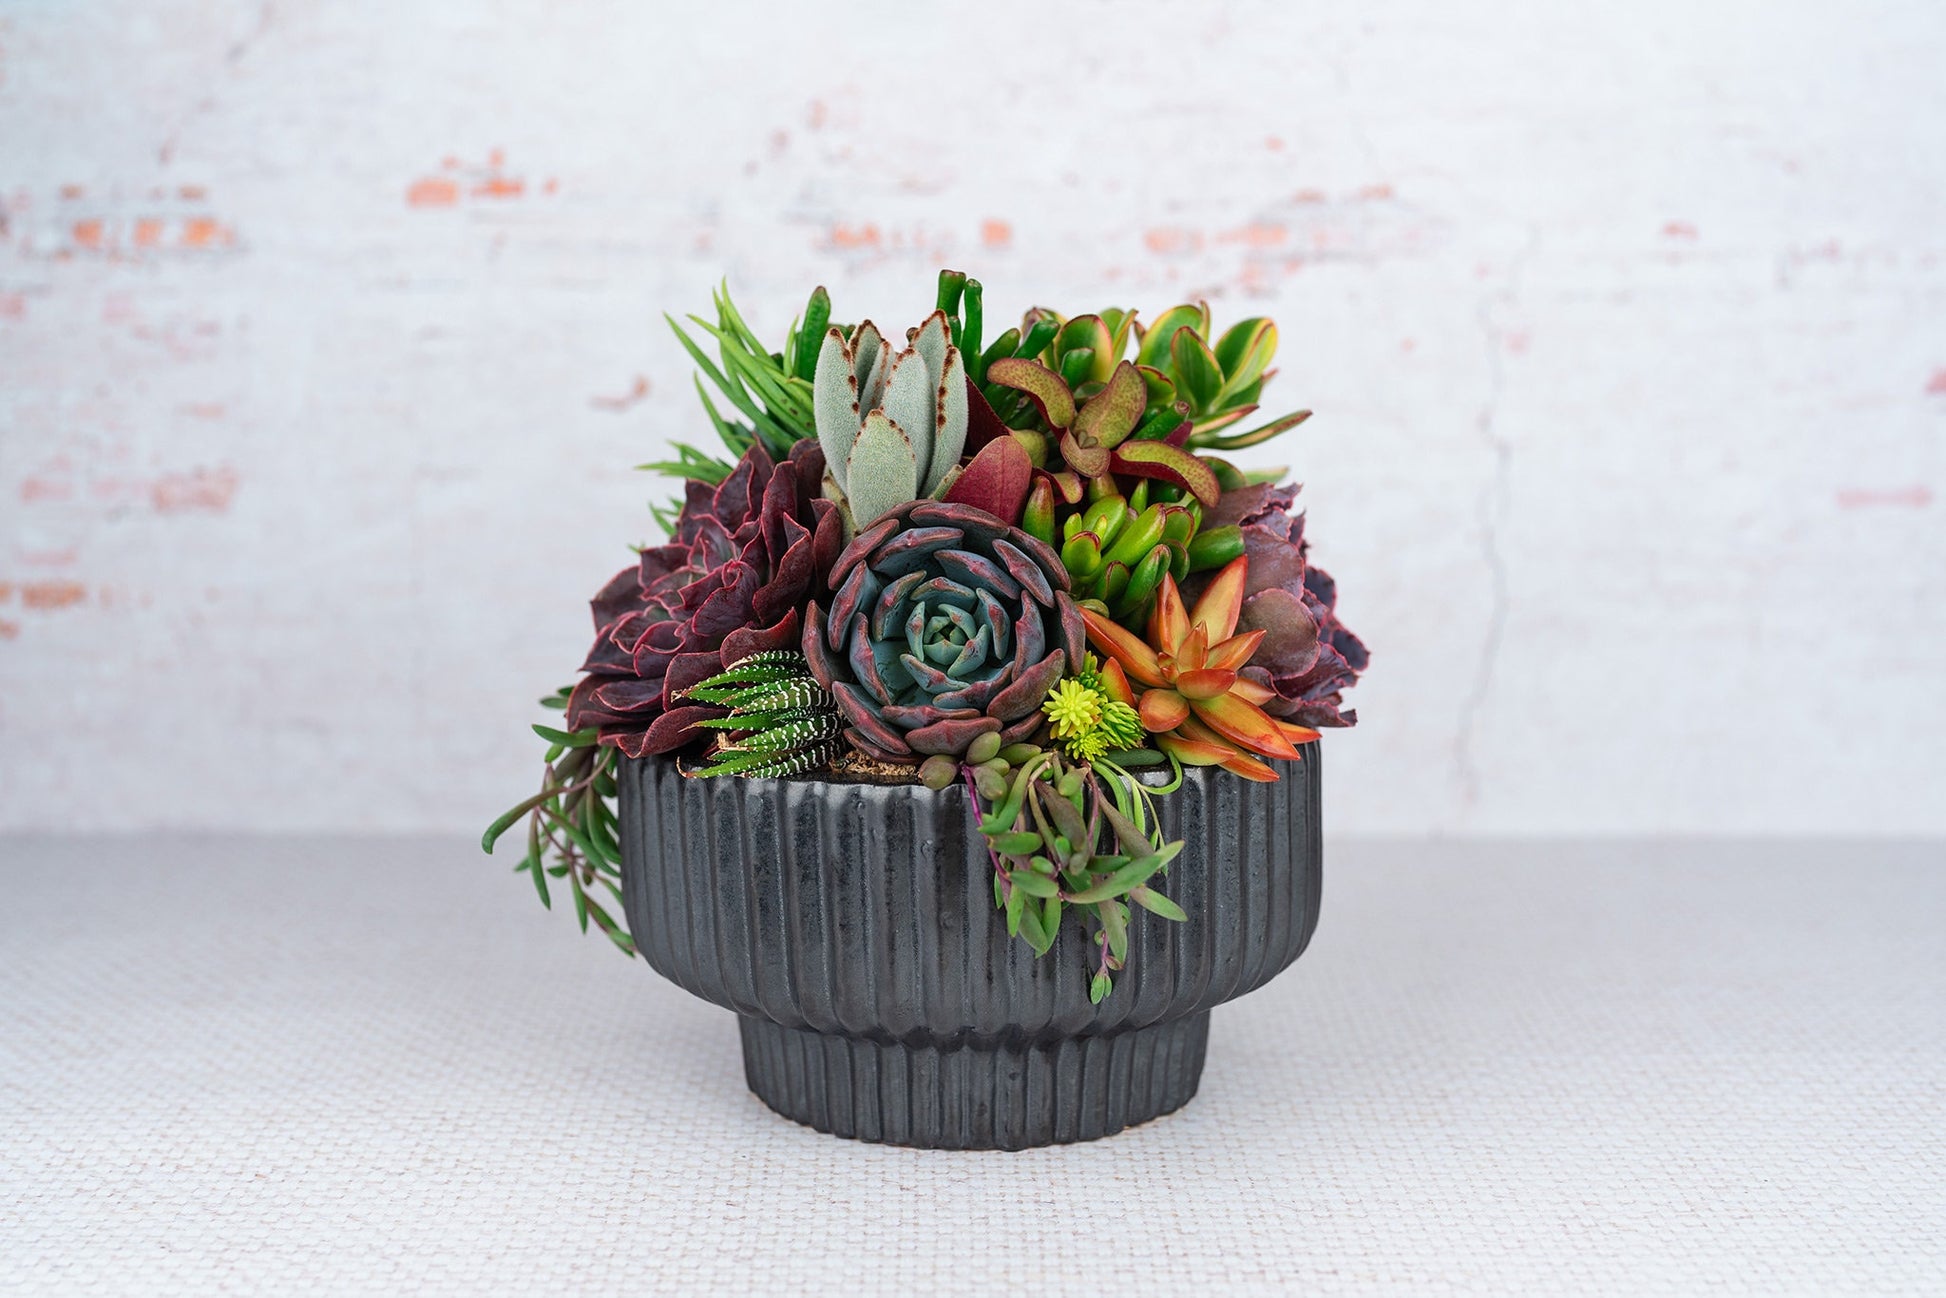 Black Textured Compote Succulent Arrangement Planter: Modern Living Succulent Gift, Centerpiece for Weddings & Events, Housewarming Gift